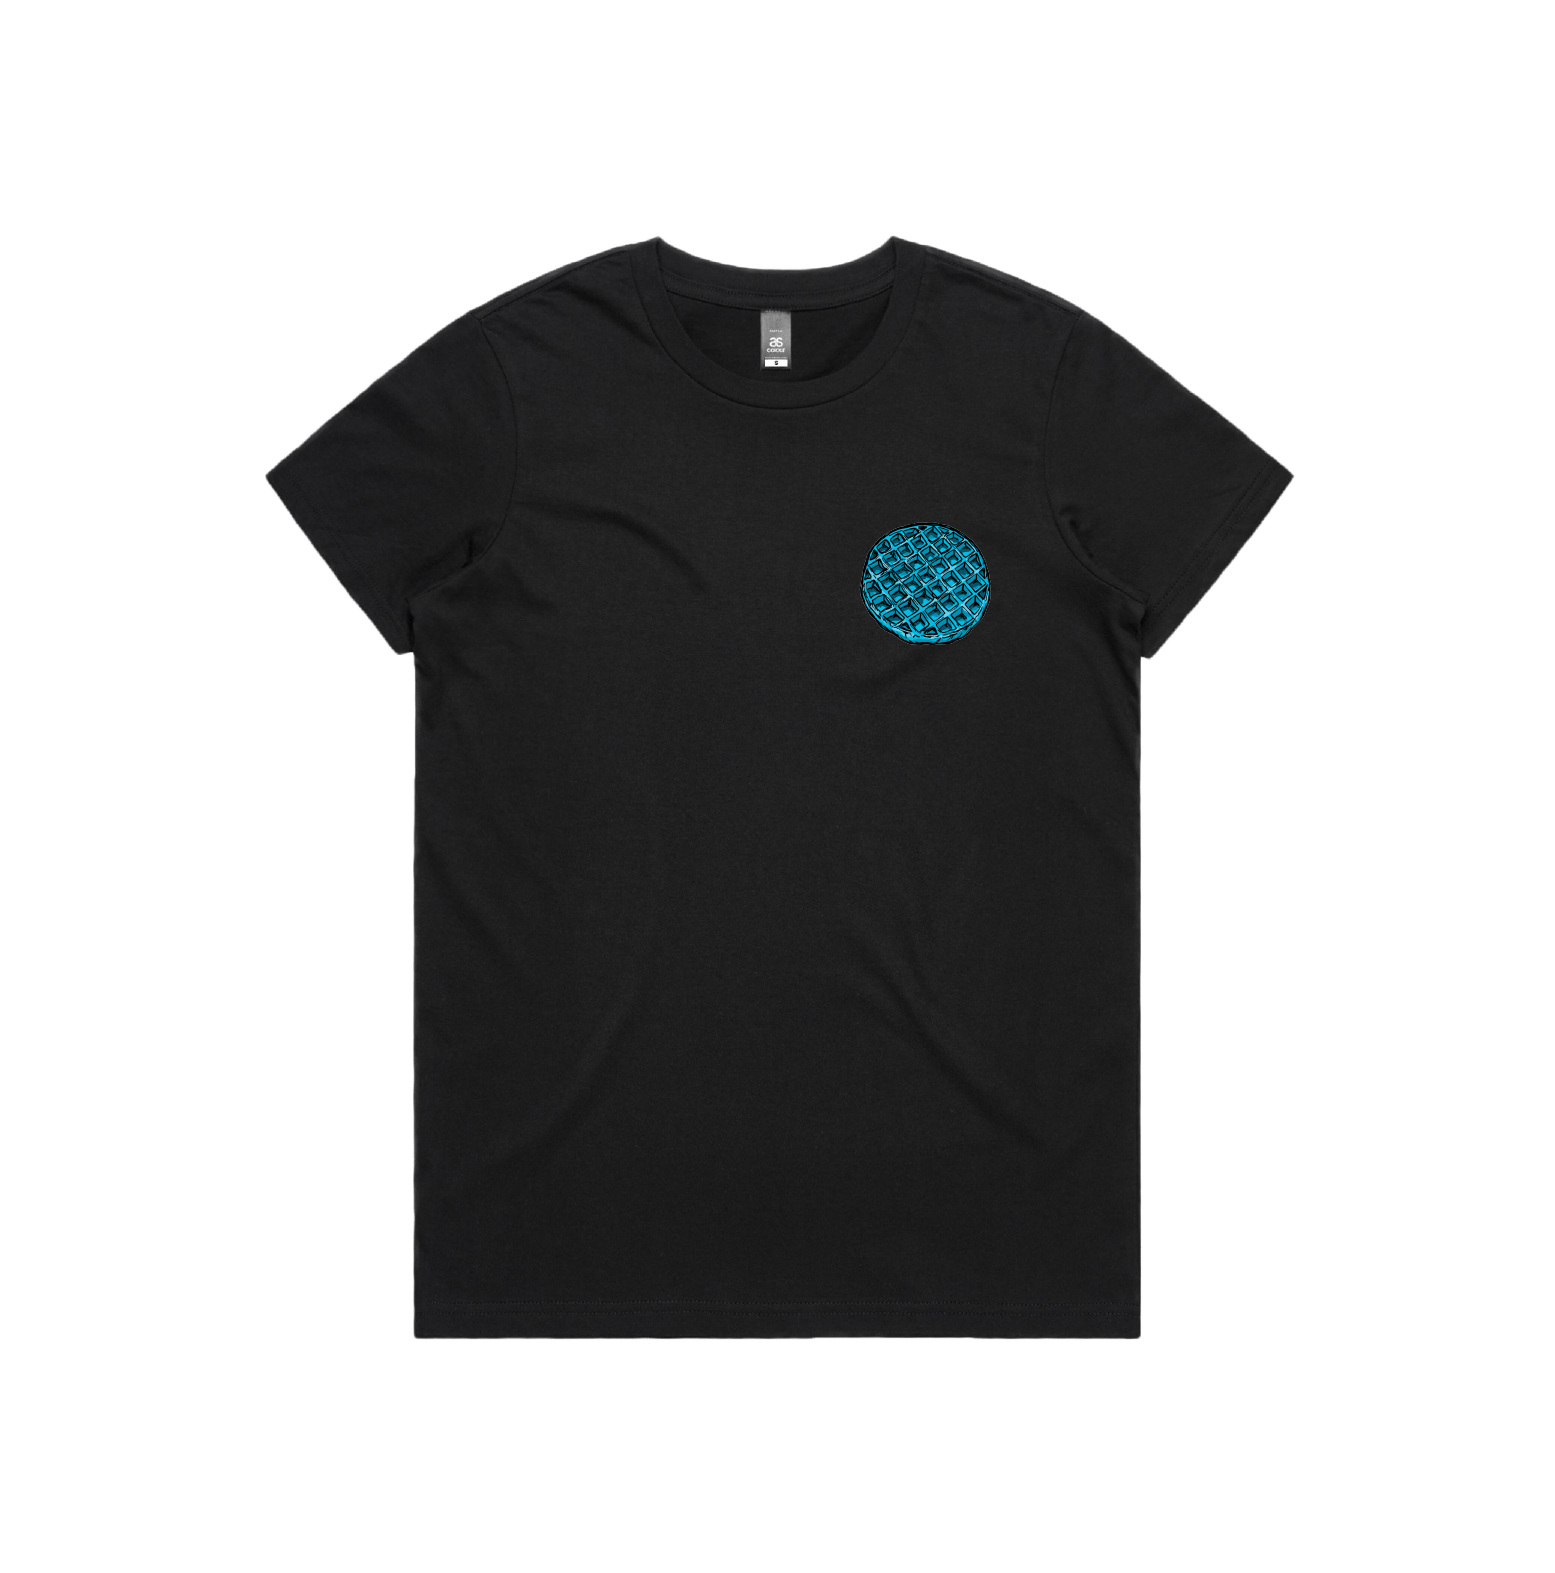 XS / Black / Small Front Design Blue Waffle 🧇🤮 - Women's T Shirt